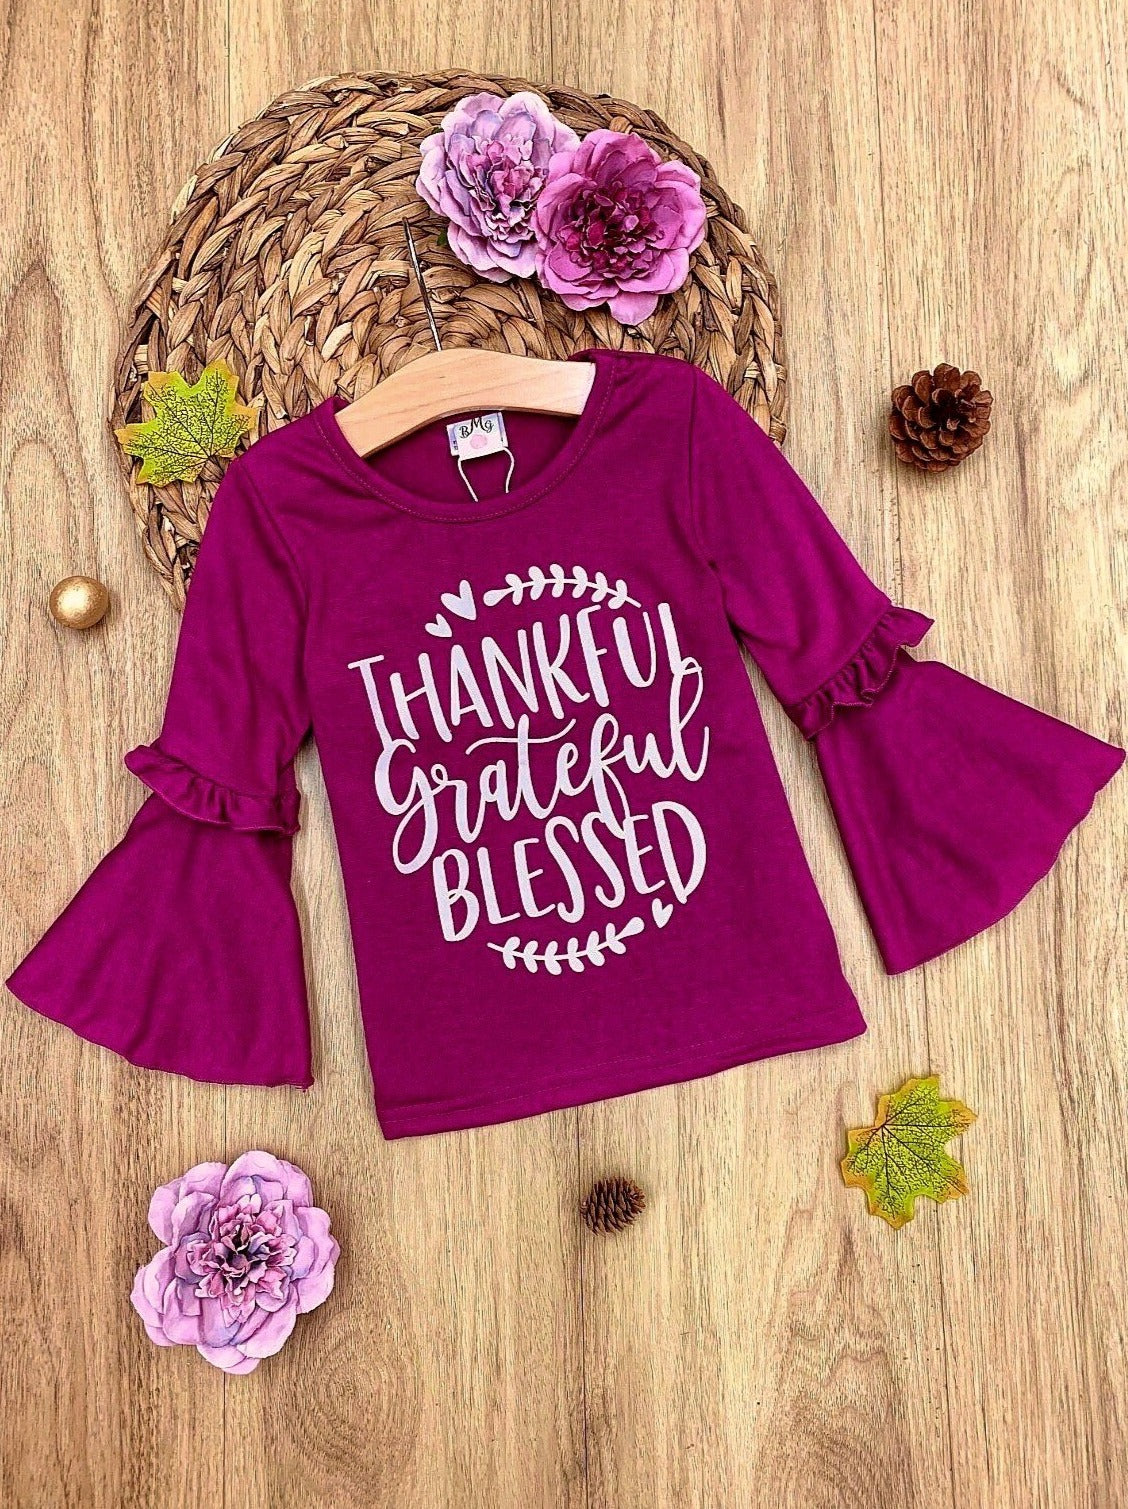 Girls "Thankful Grateful Blessed" Boho Sleeve Top